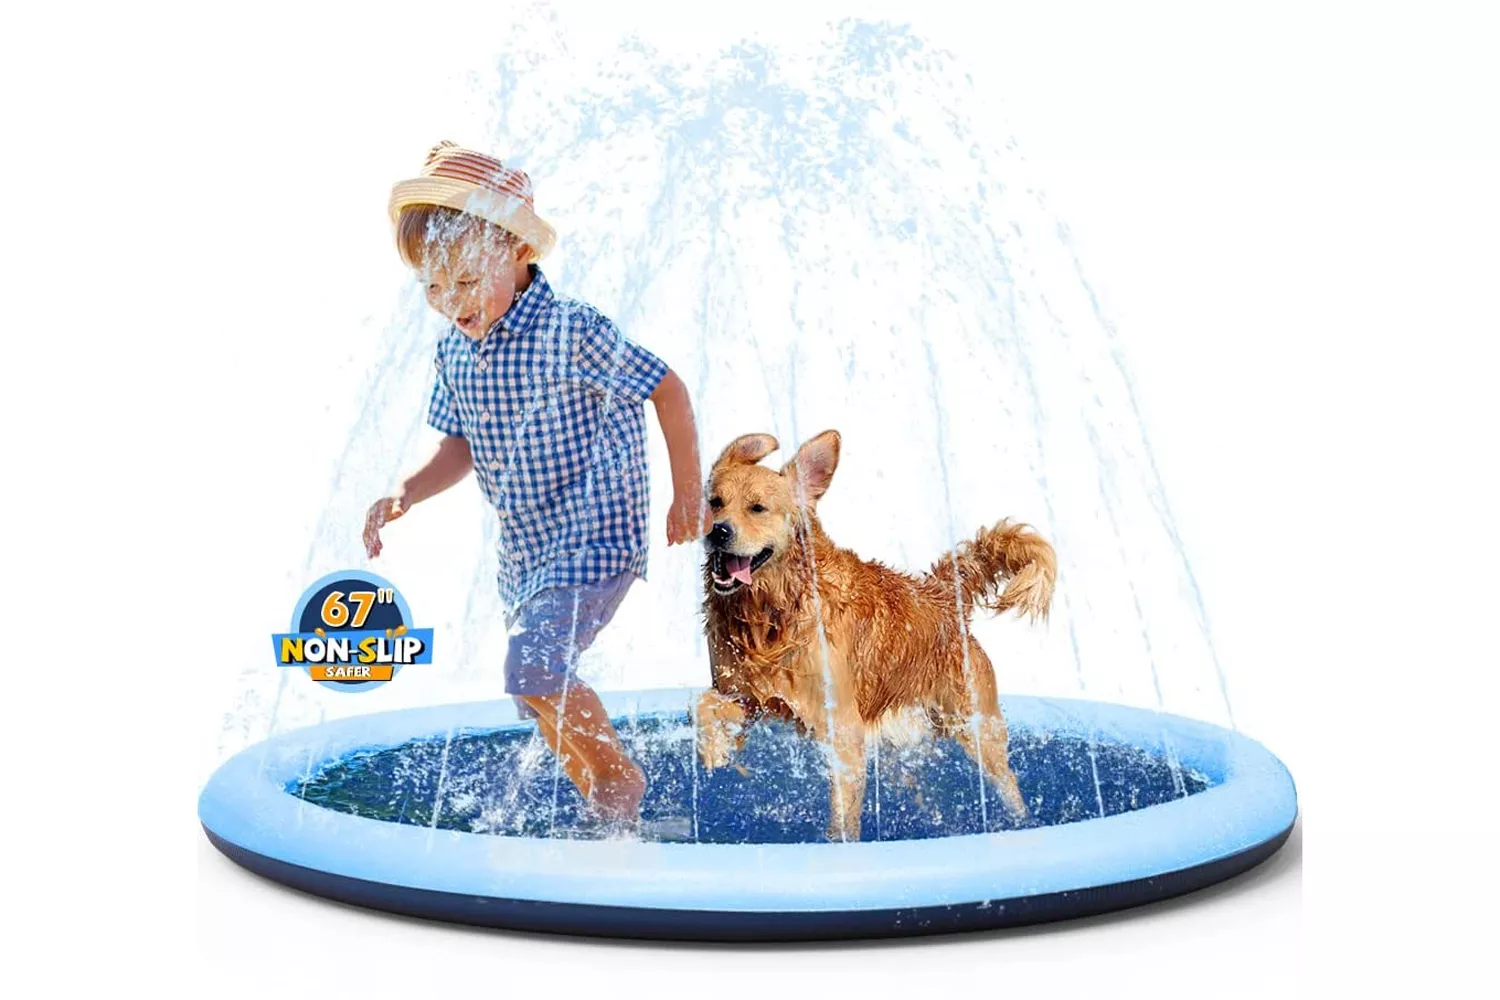 VISTOP Non-Slip Splash Pad for Kids and Dogs